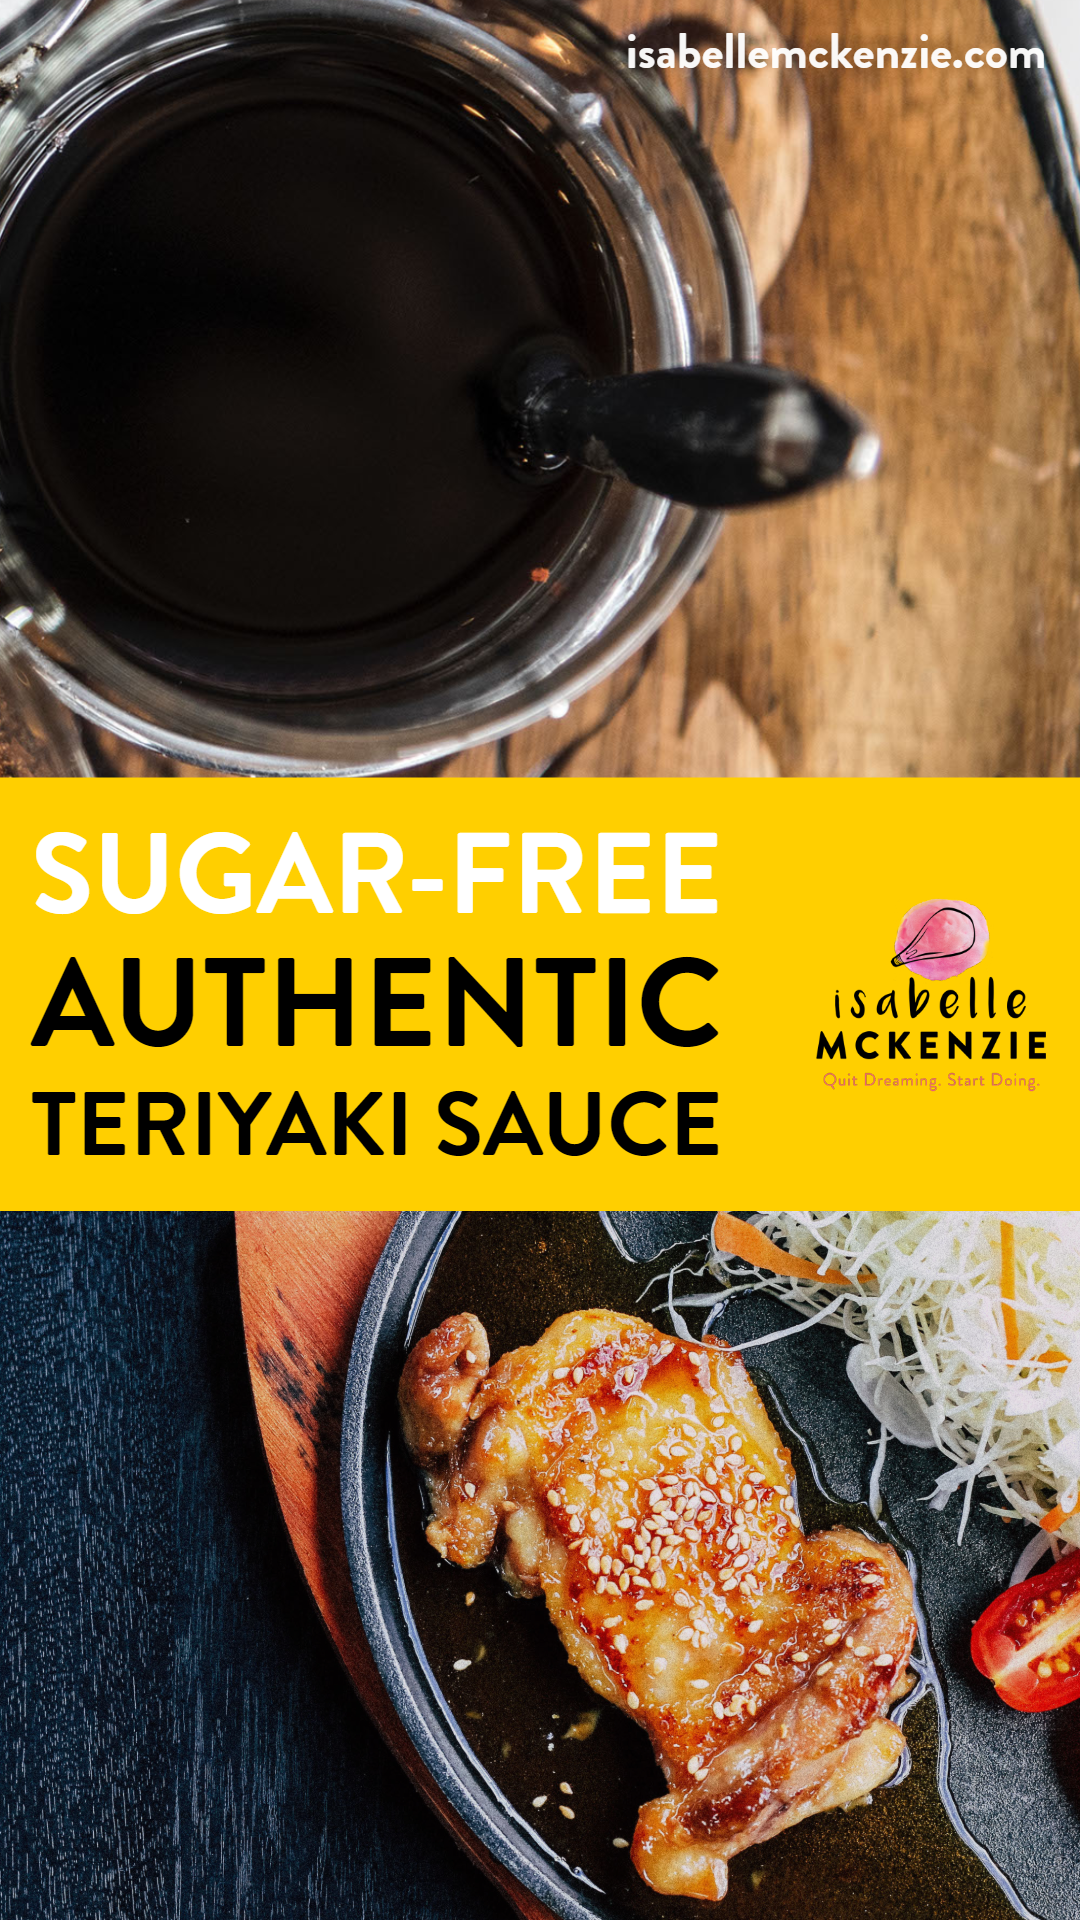 Sugar-Free Authentic Teriyaki Sauce Recipe (Gluten-Free, Vegan, Keto)